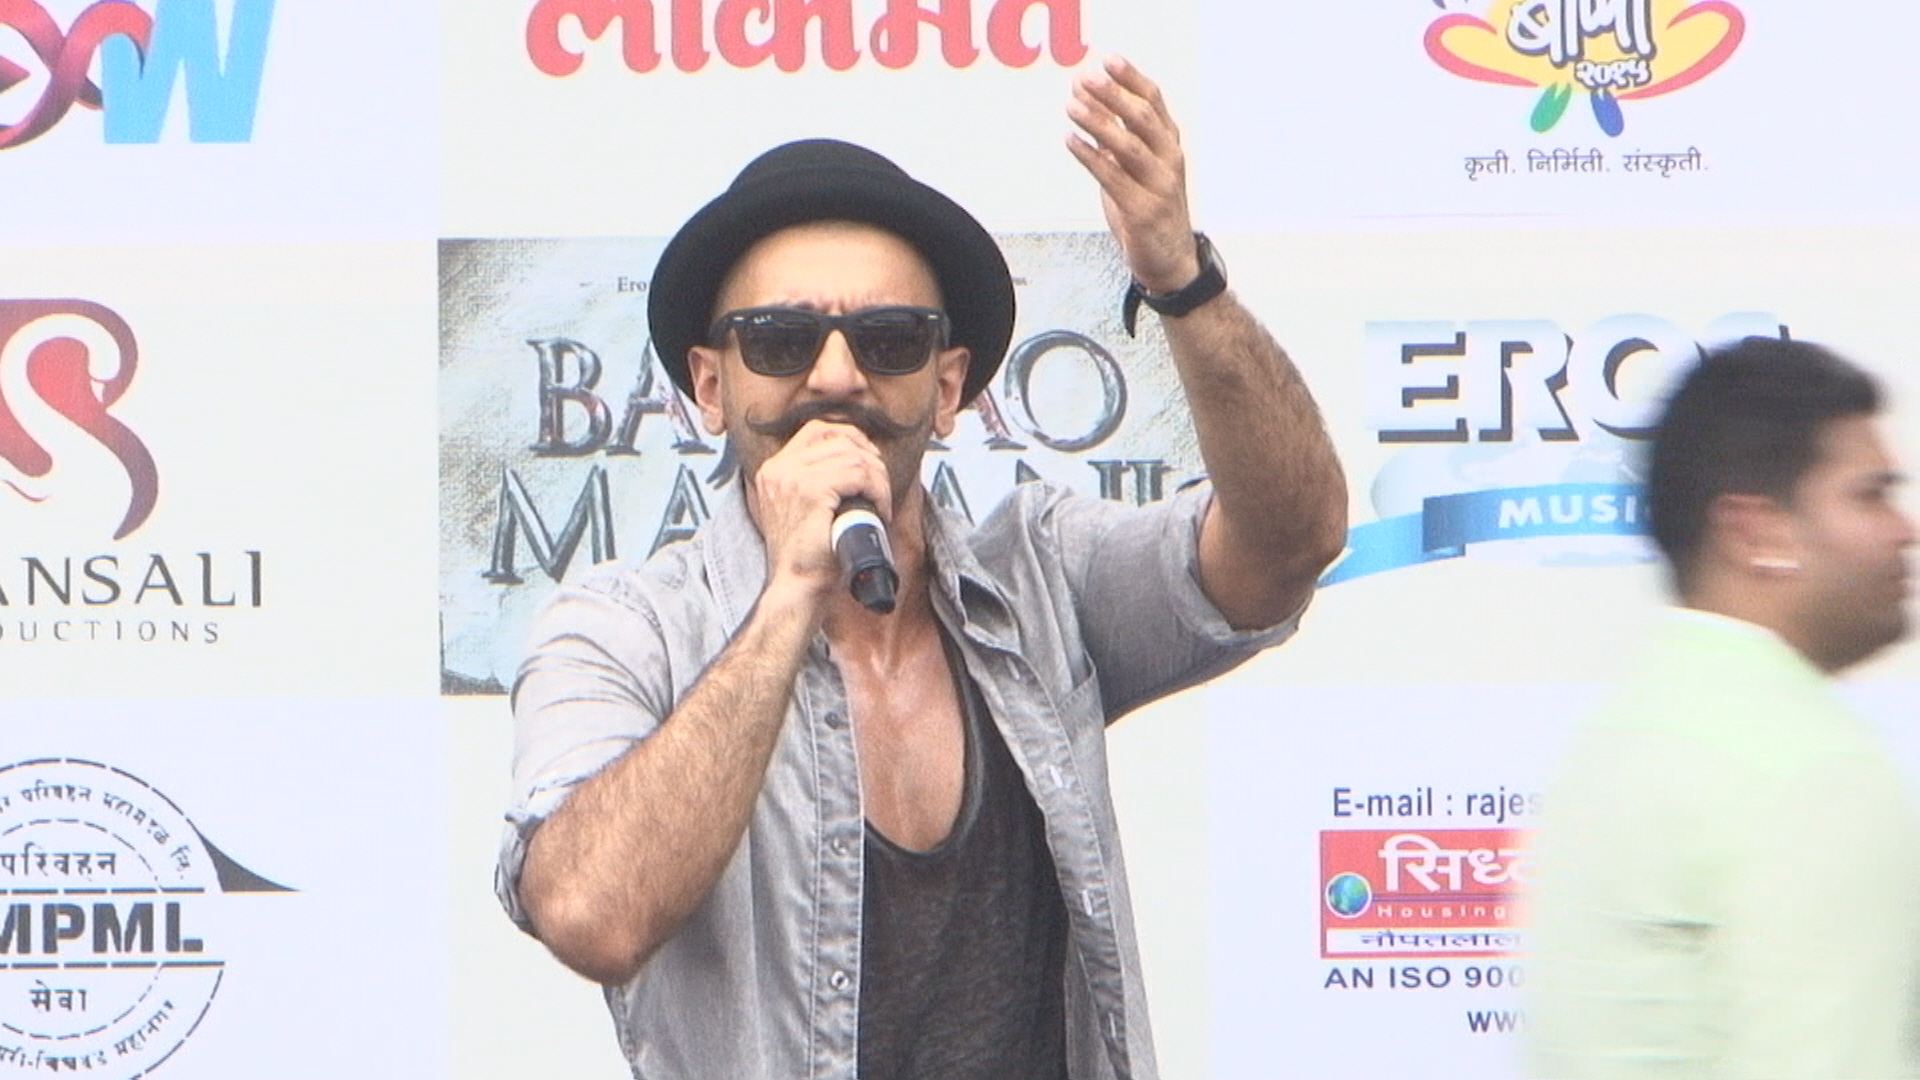 Ranveer Singh during the song launch of Gajanana